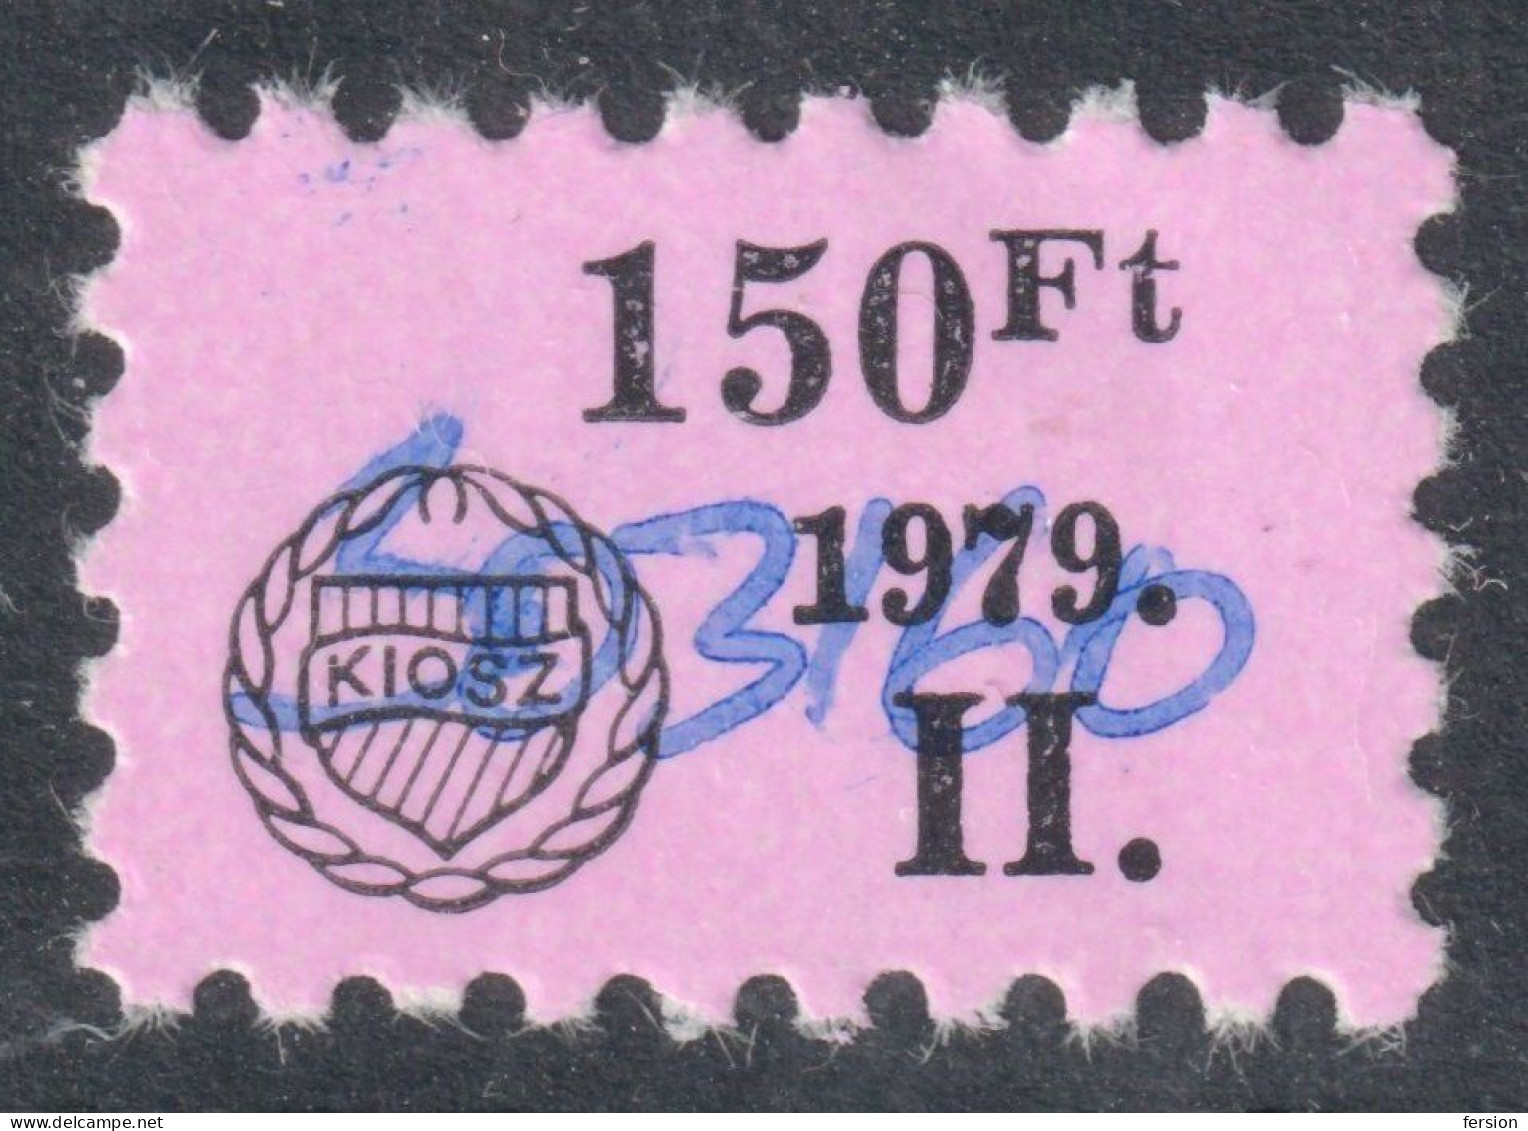 Hungarian Association Of Craftmen - Artisan KIOSZ / Charity Aid Member Label / Vignette / Cinderella - Used 1979 HUNGARY - Service